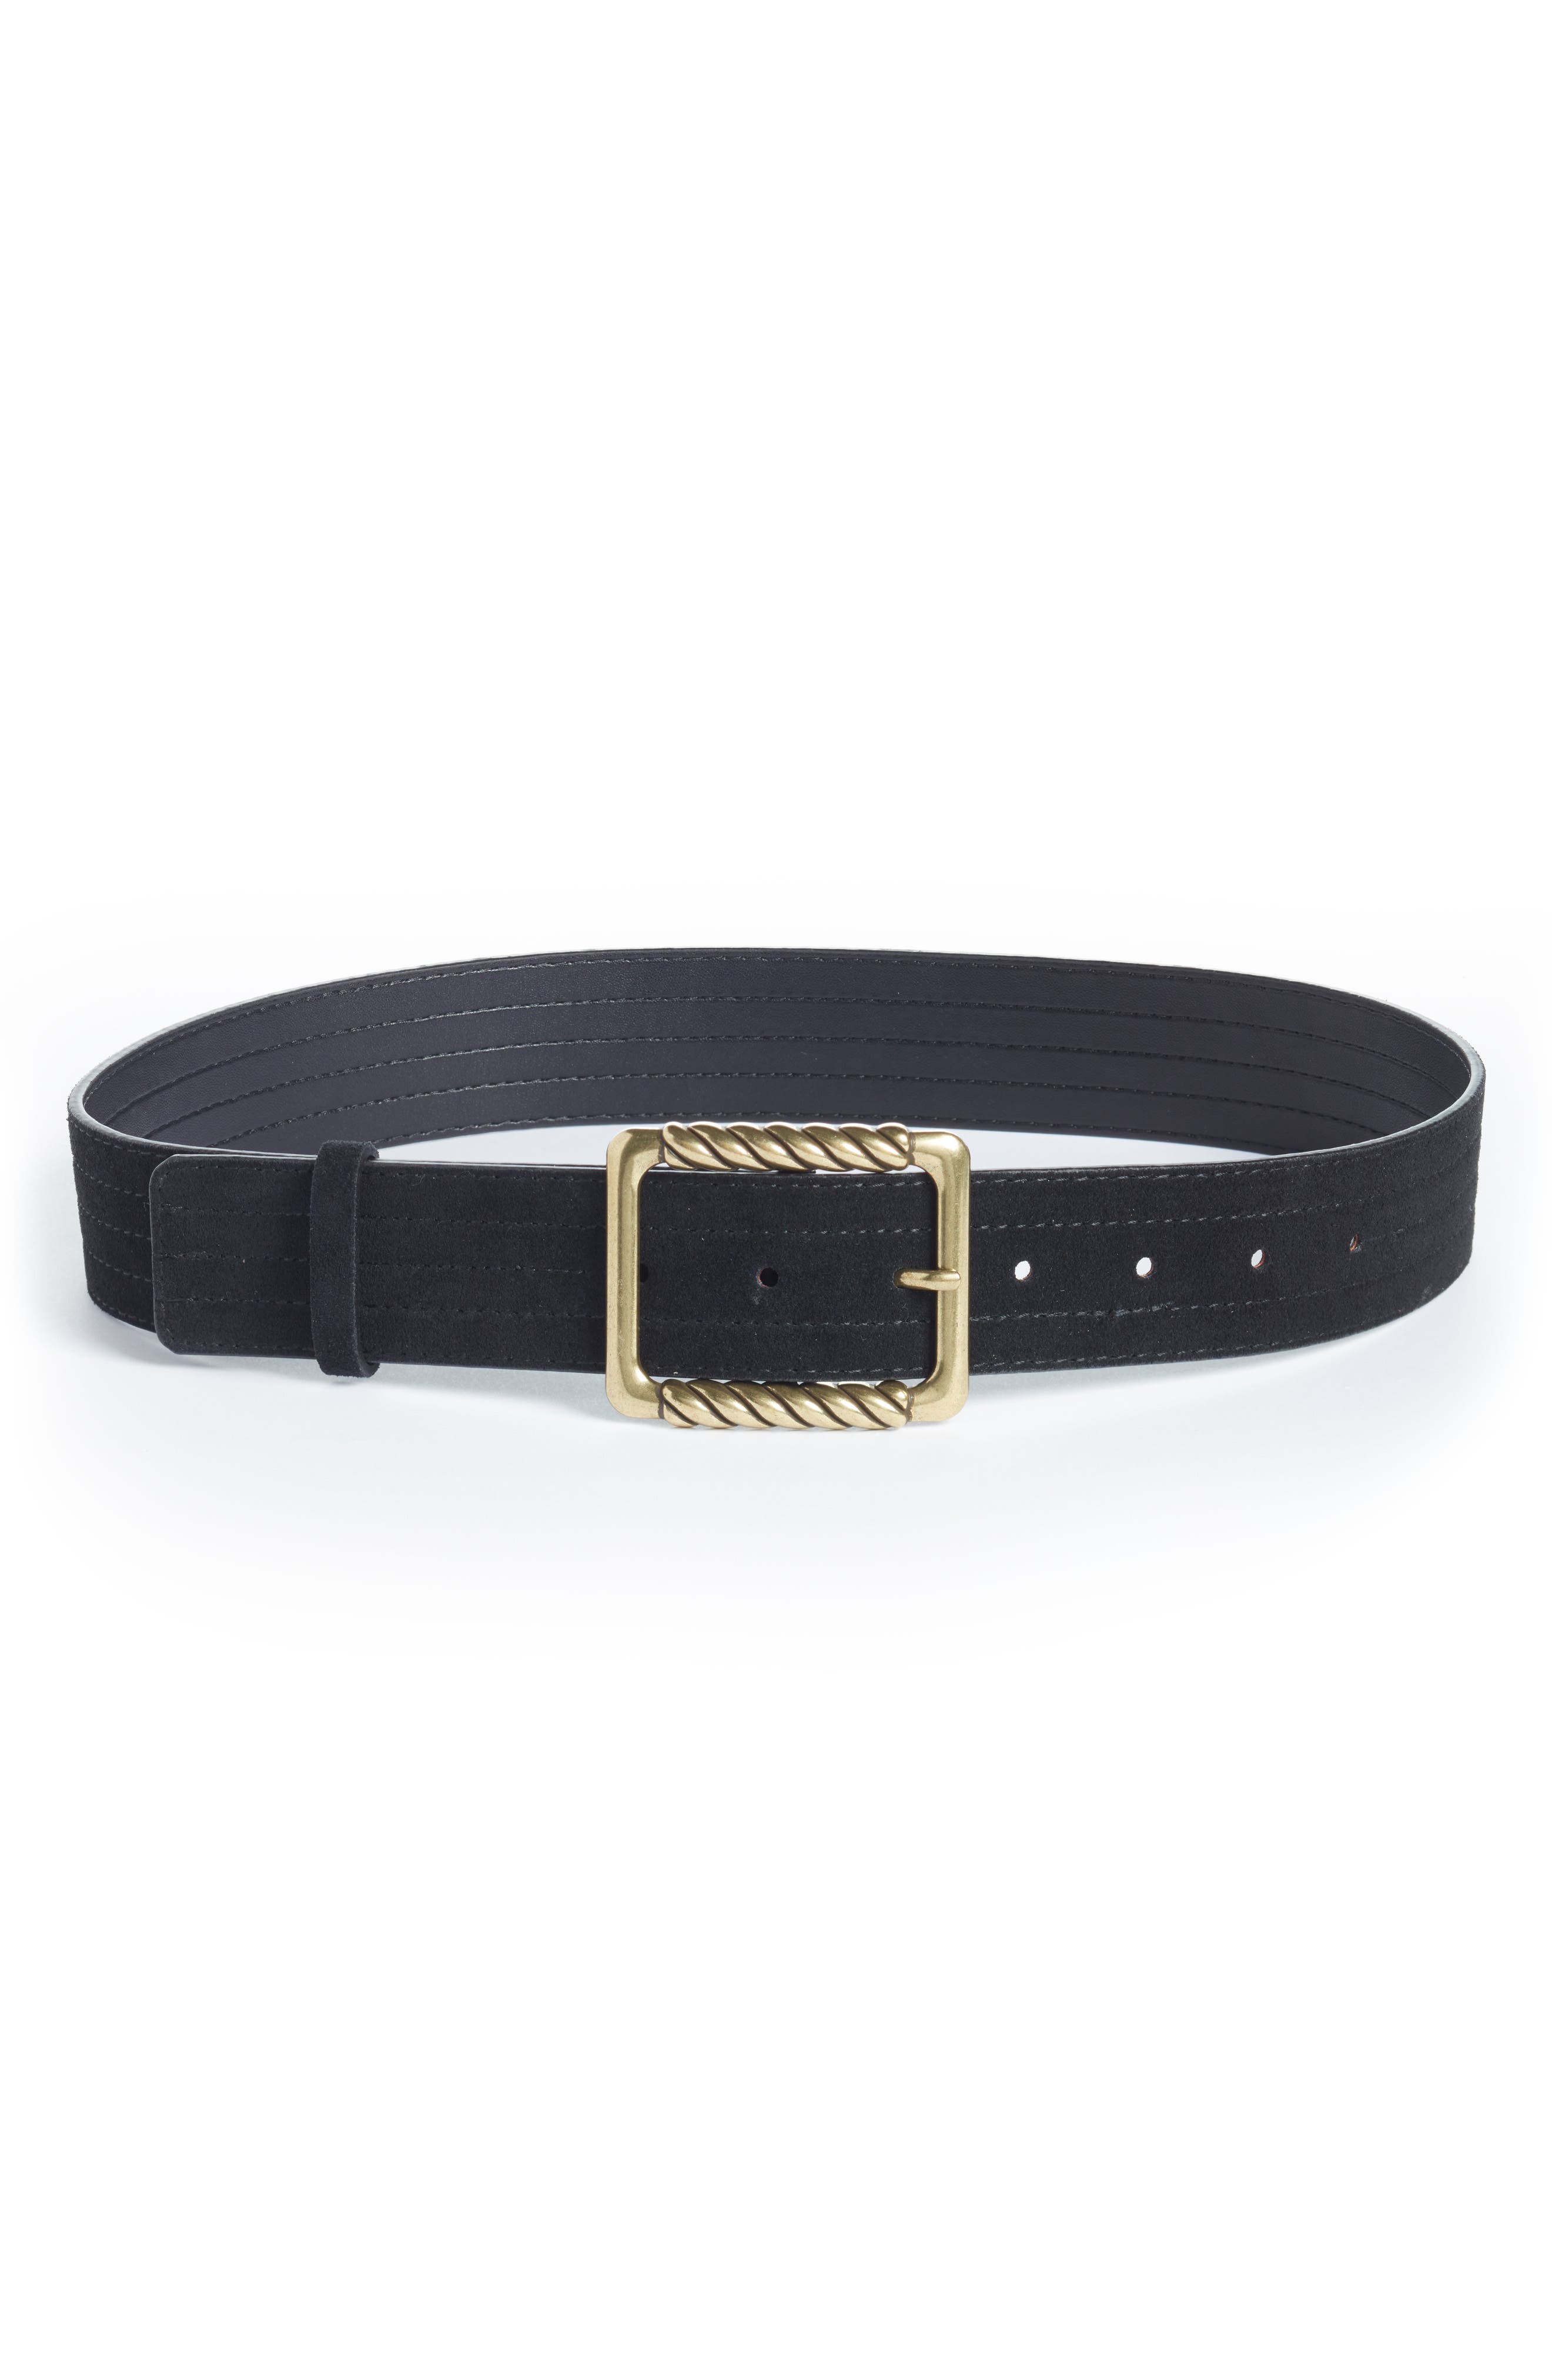 Treasure & Bond Oval Buckle Leather Belt in Black at Nordstrom, Size Medium